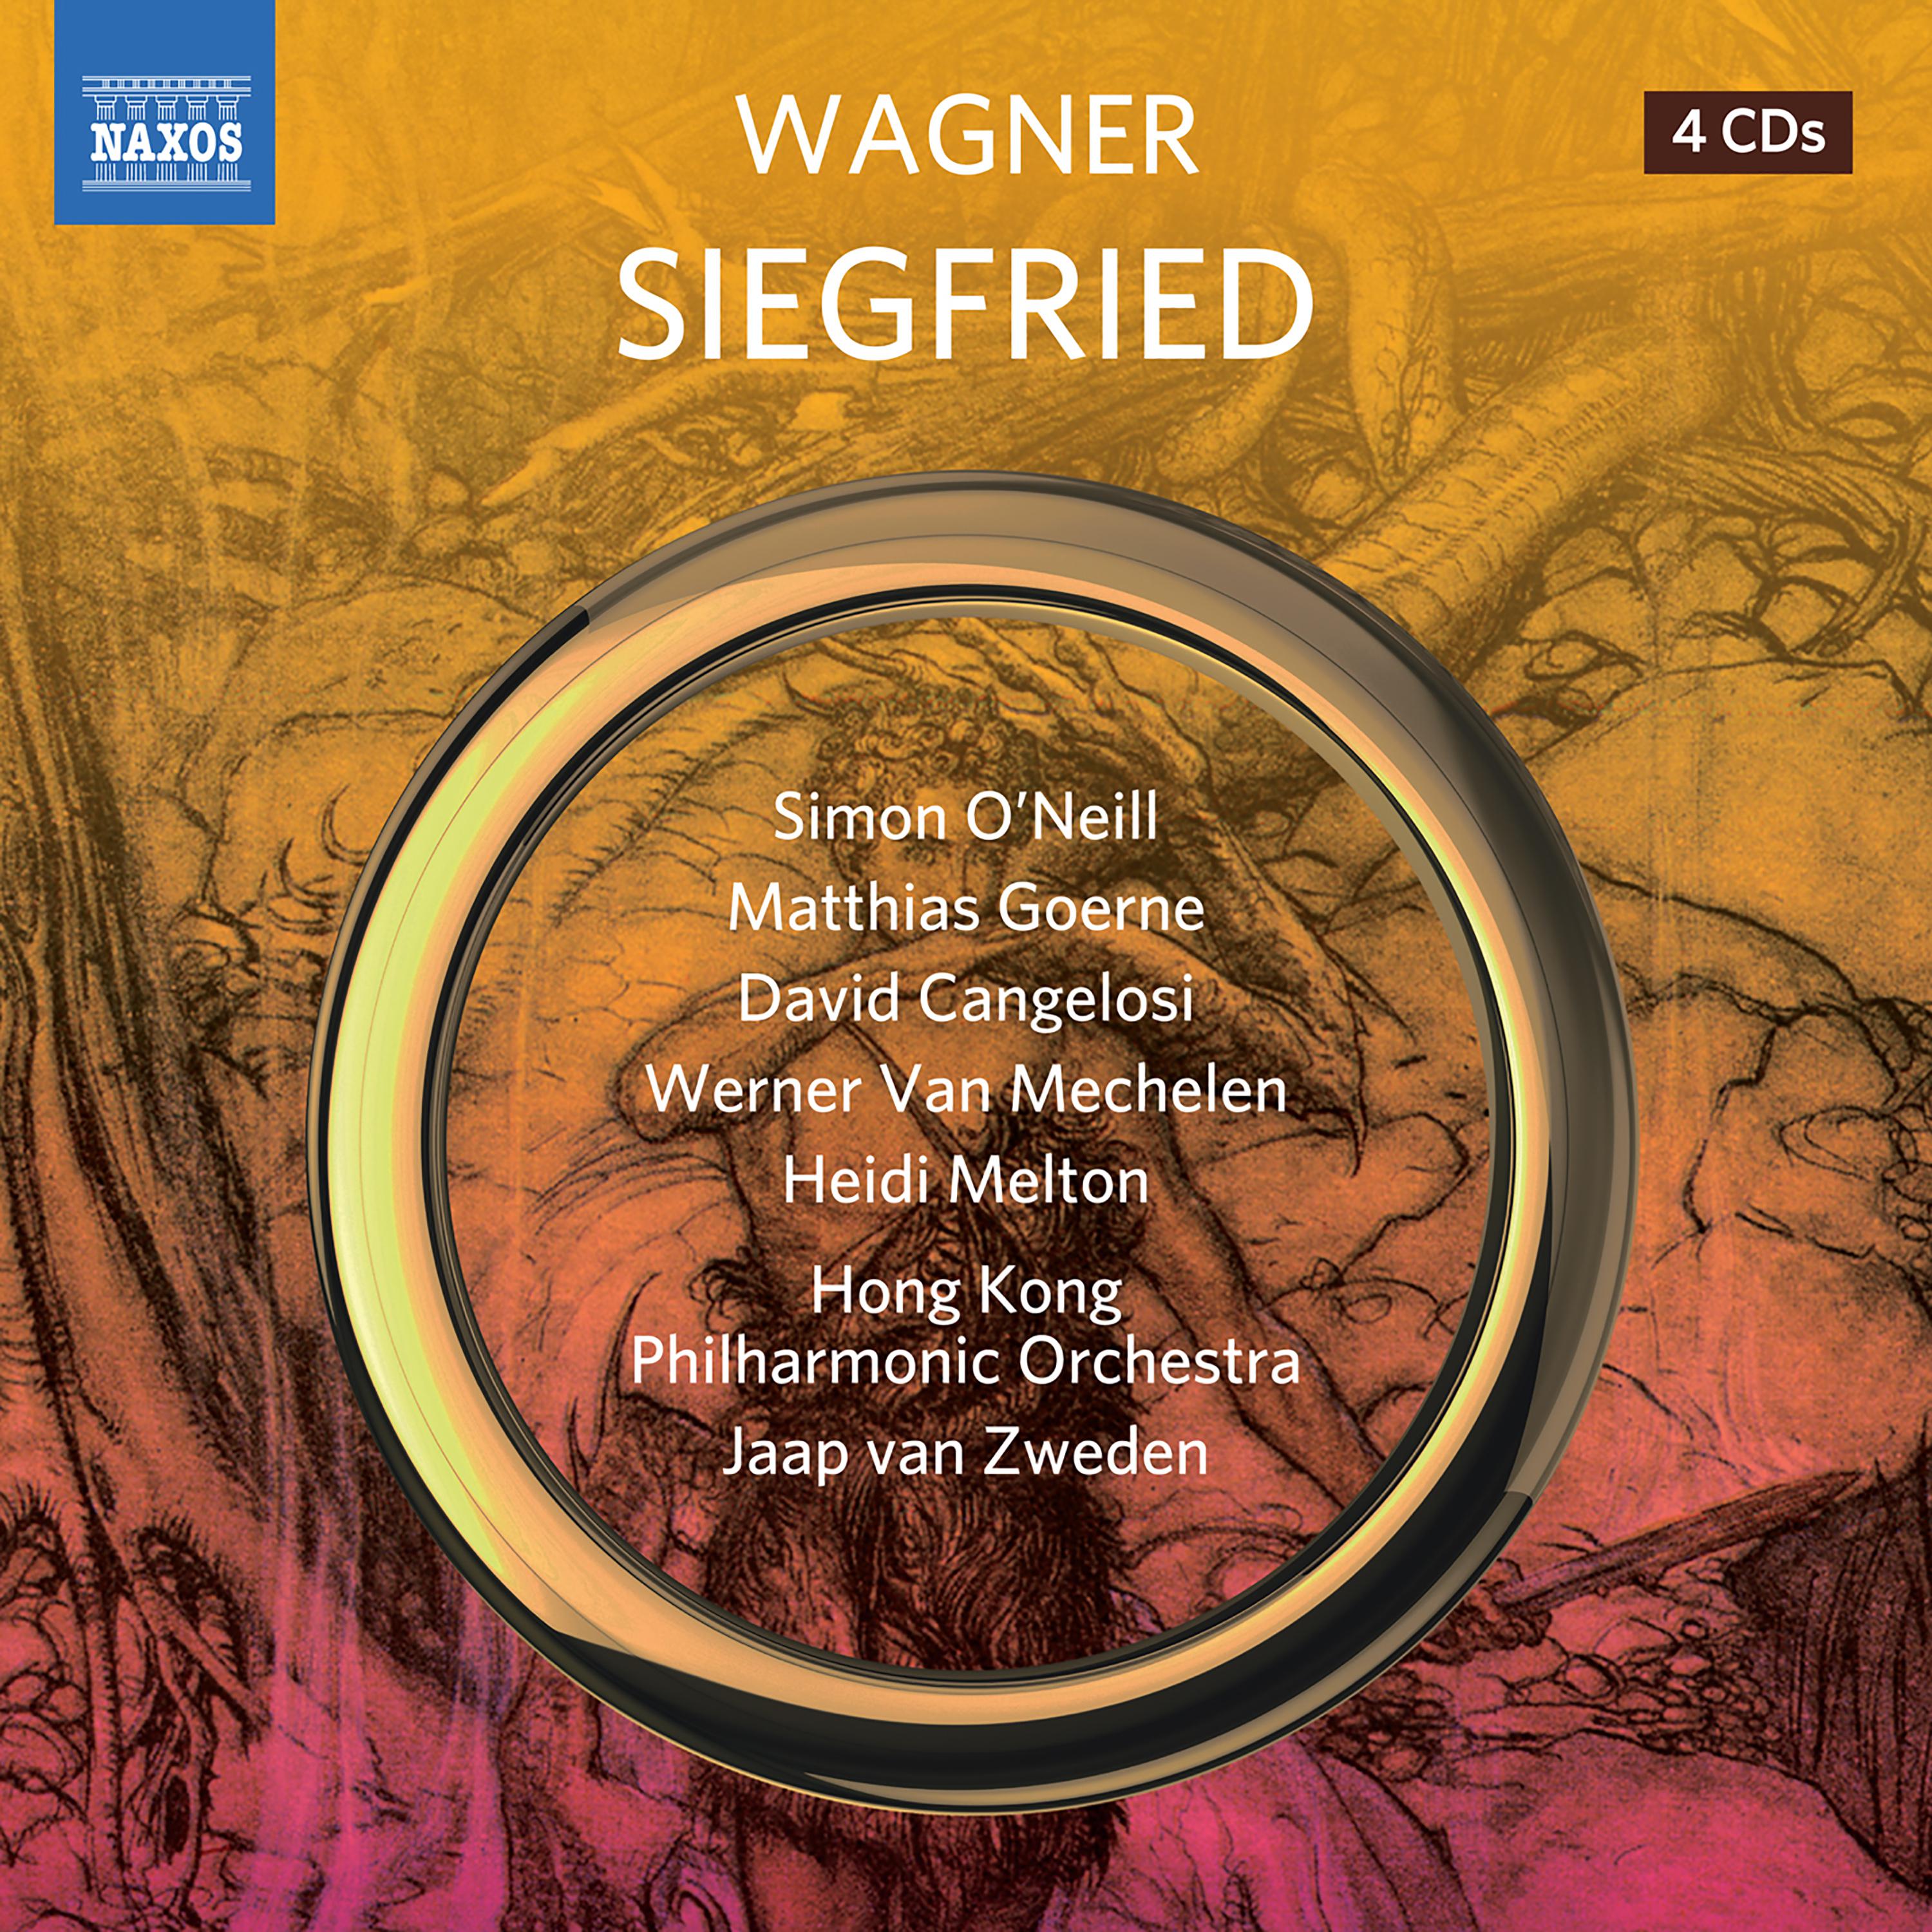 Simon O'Neill - Siegfried:Act III Scene 2: Bleibst du mir stumm, störrischer Wicht? (Siegfried, The Wanderer)